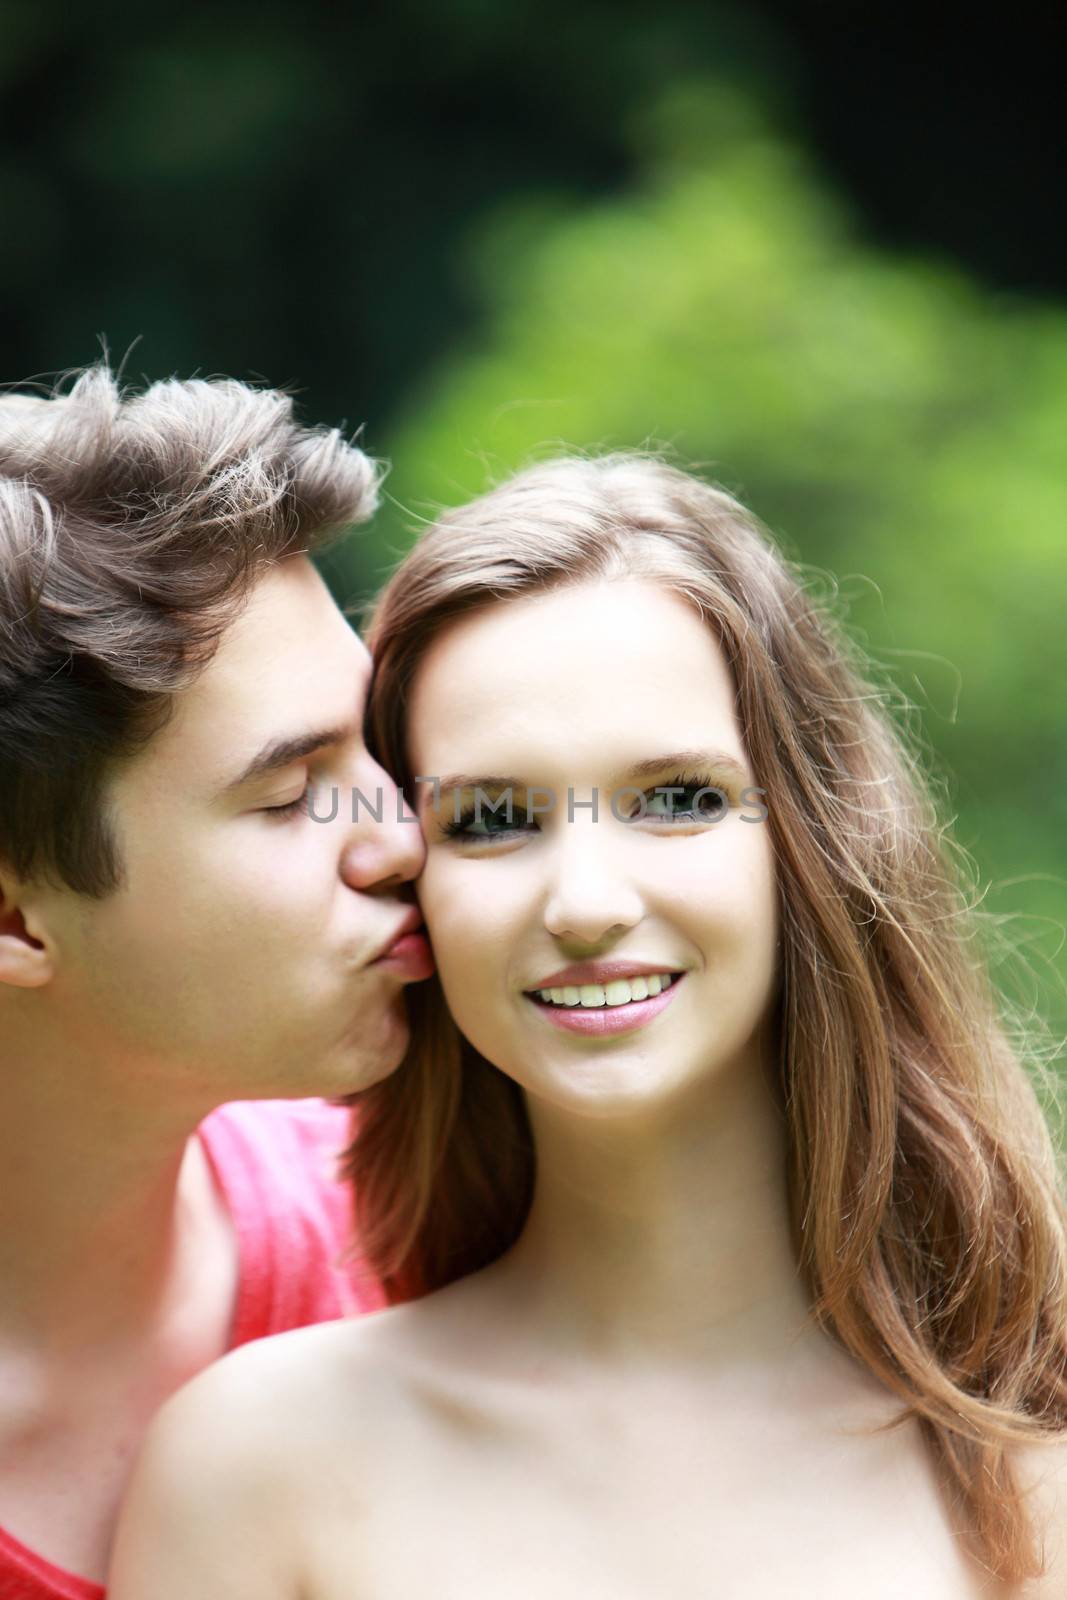 Young man kissing his girlfriend by Farina6000